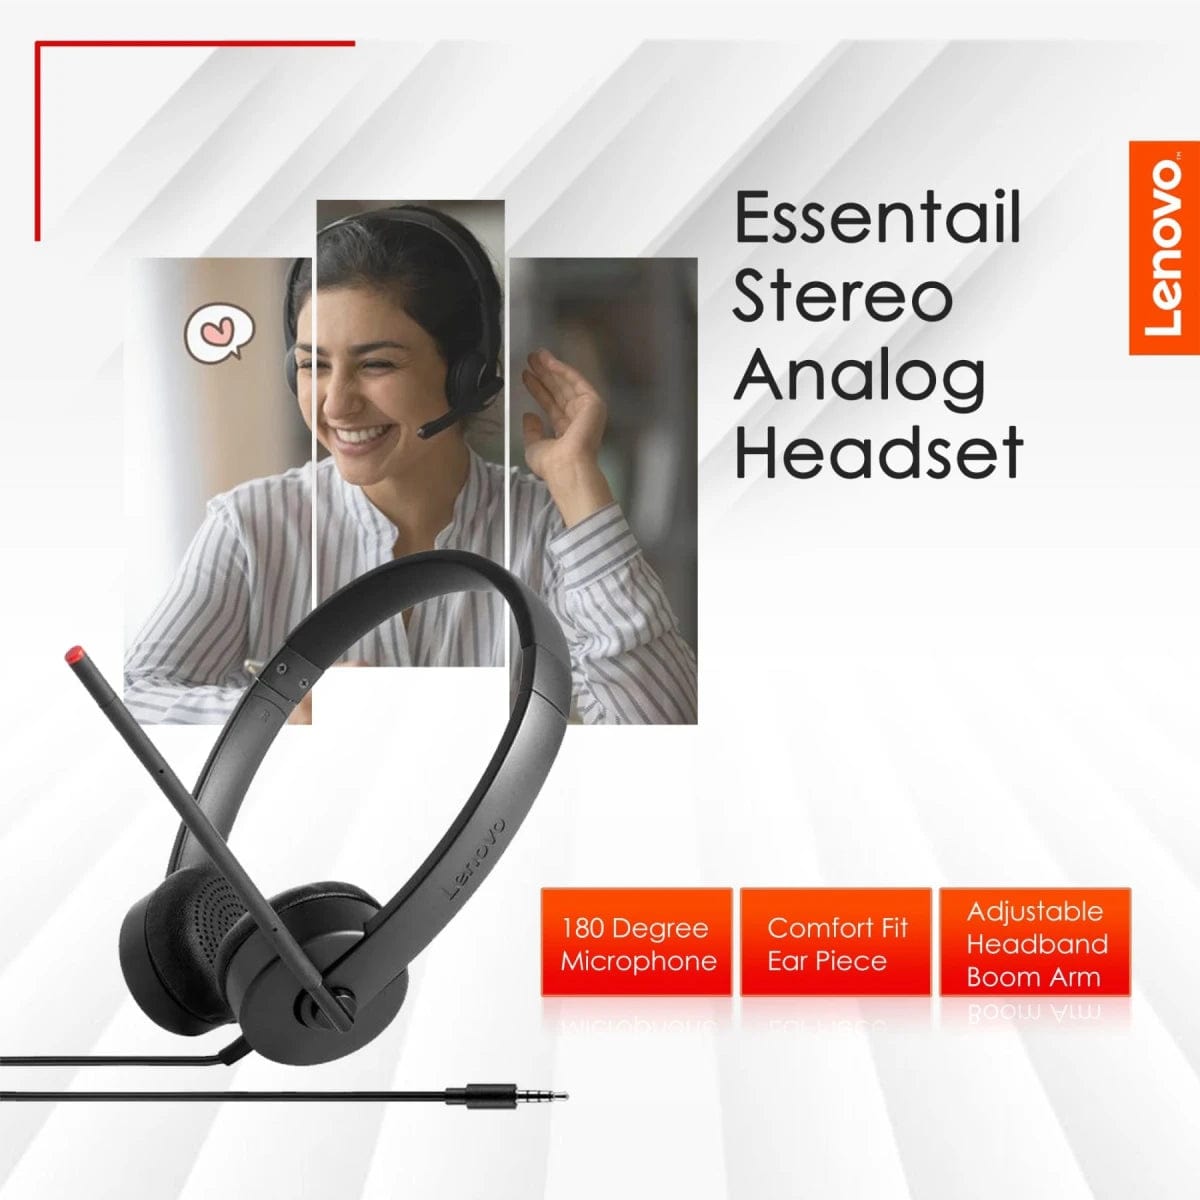 LENOVO headset Lenovo Essential Stereo Analog Headset Wire Jake (3.5mm) Headphone Swivel Mic Boom Comfortable Ear Pieces 4XD0K25030